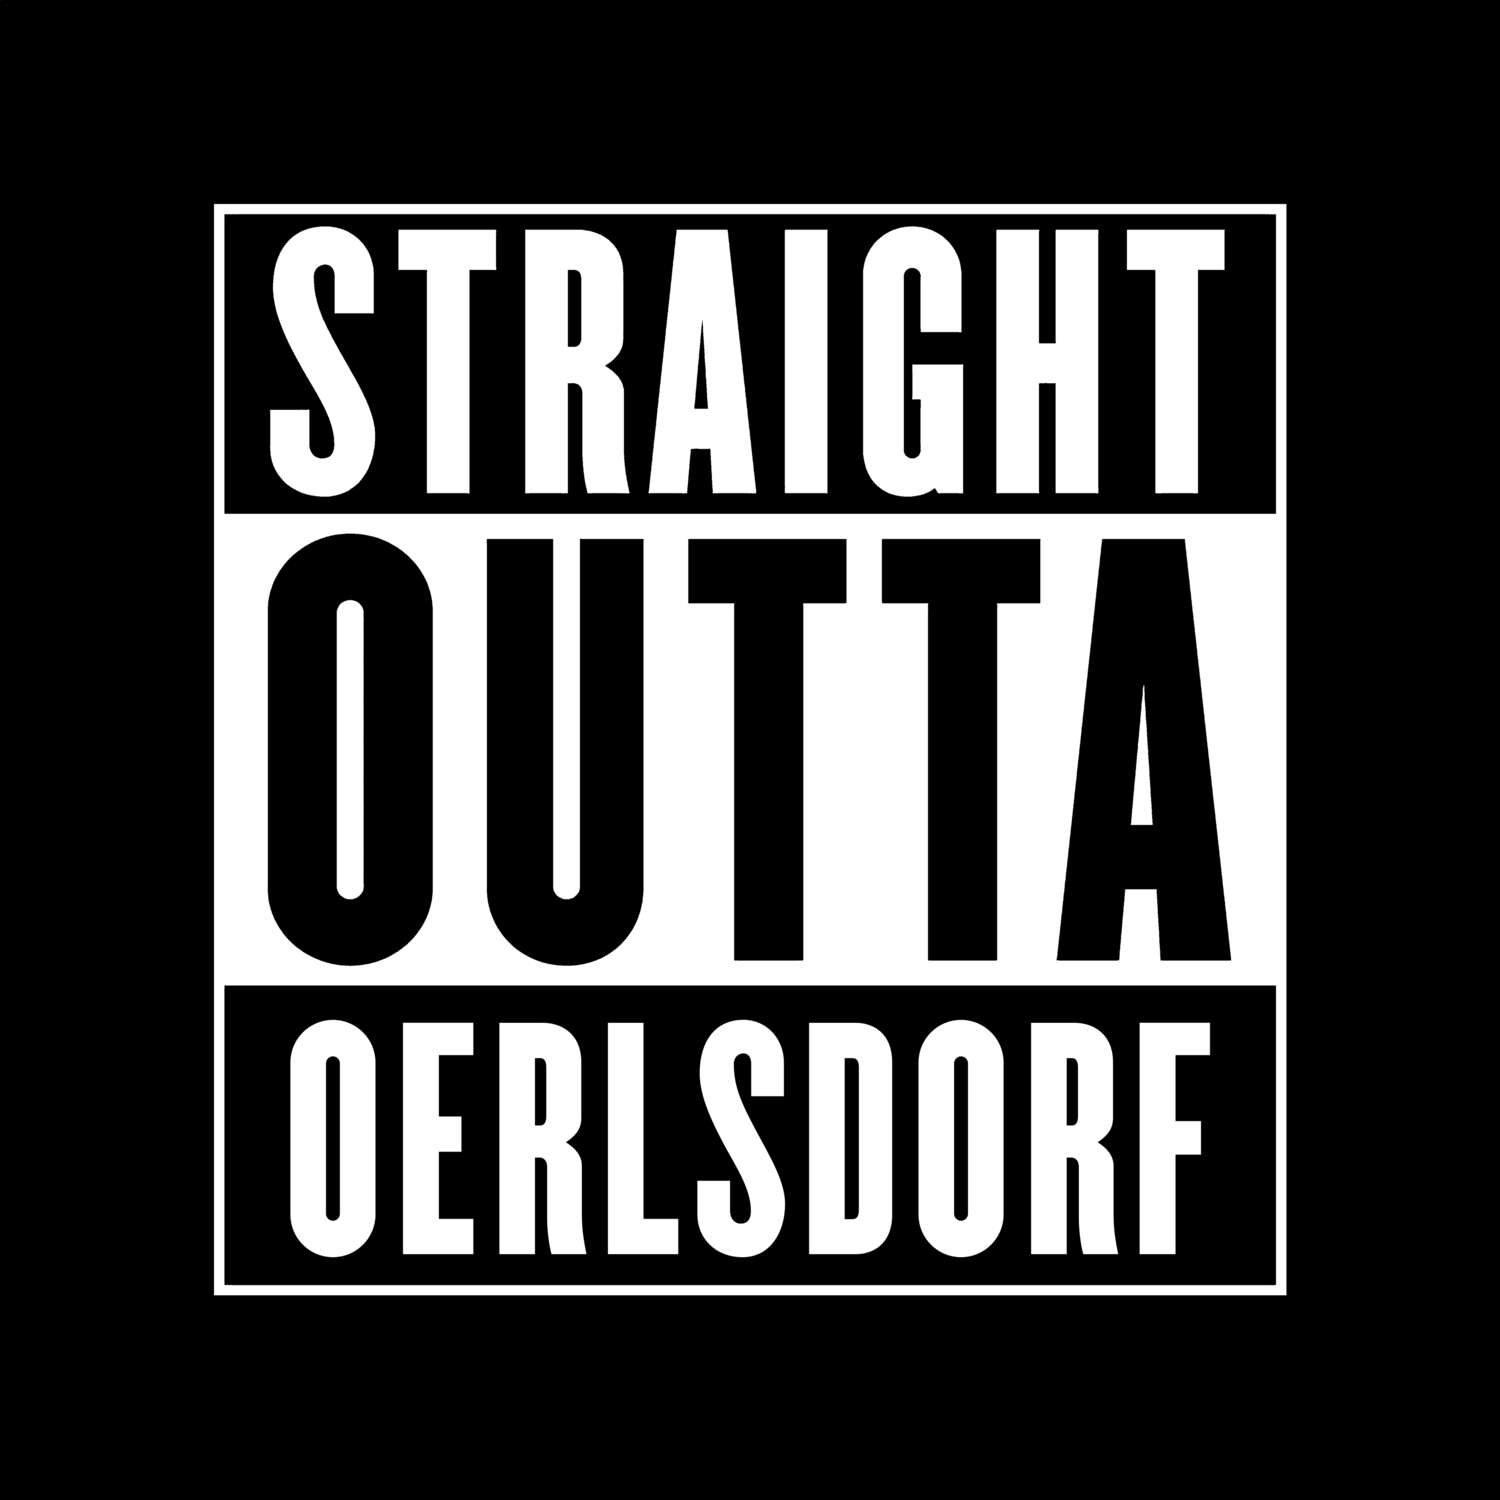 Oerlsdorf T-Shirt »Straight Outta«